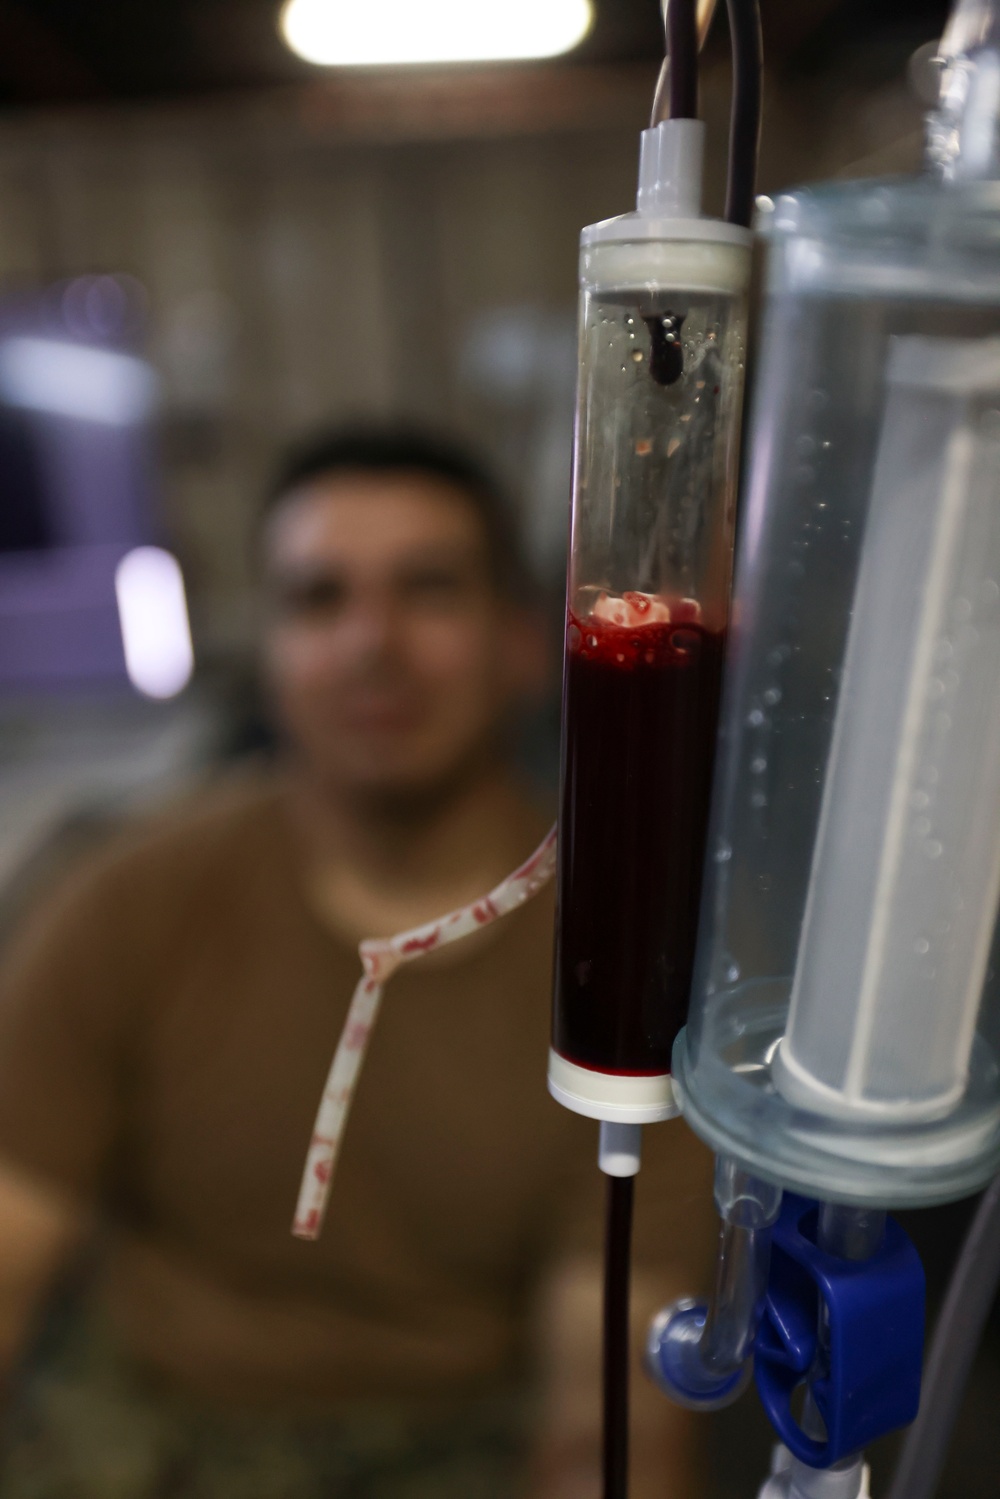 ERSS 31 Conducts Whole Blood Transfusion Training